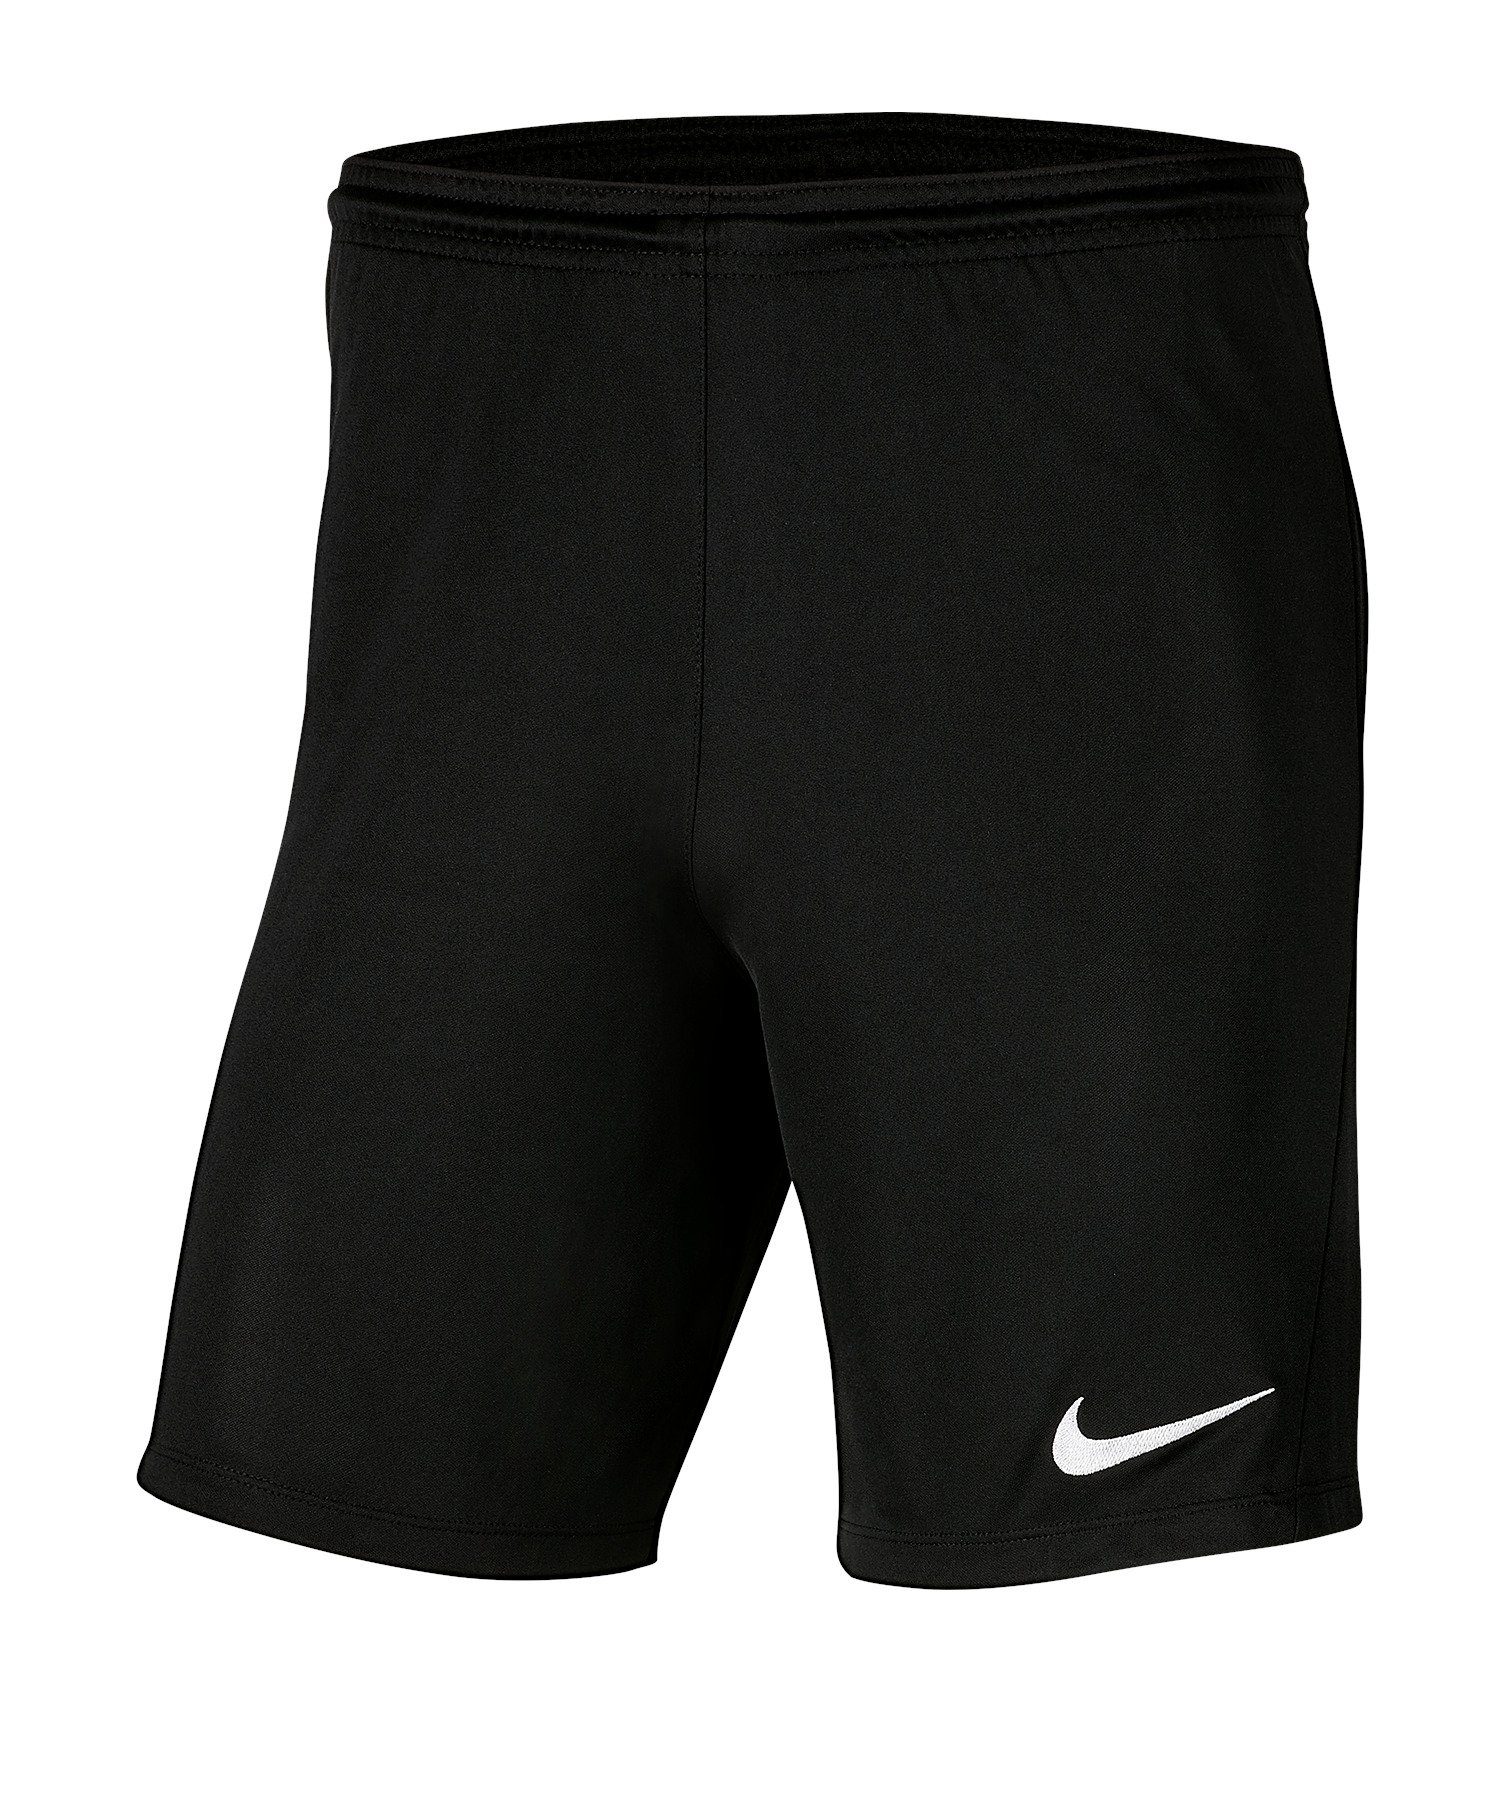 III Sporthose schwarz Park Nike Short